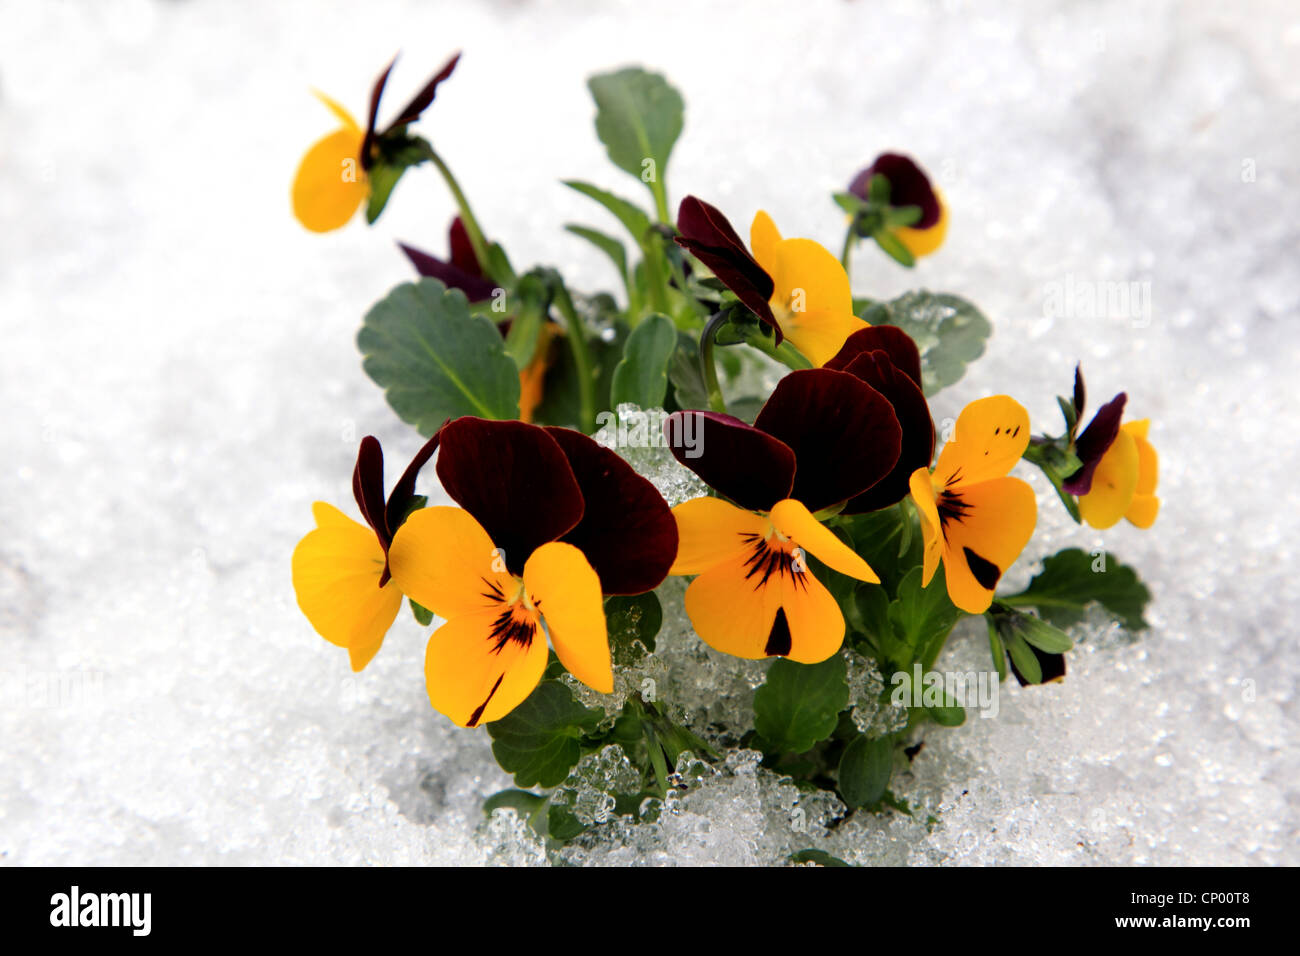 Pansy, Pansy Violet (Viola x wittrockiana, Viola wittrockiana, Viola hybrida), Panys violets in snow Stock Photo